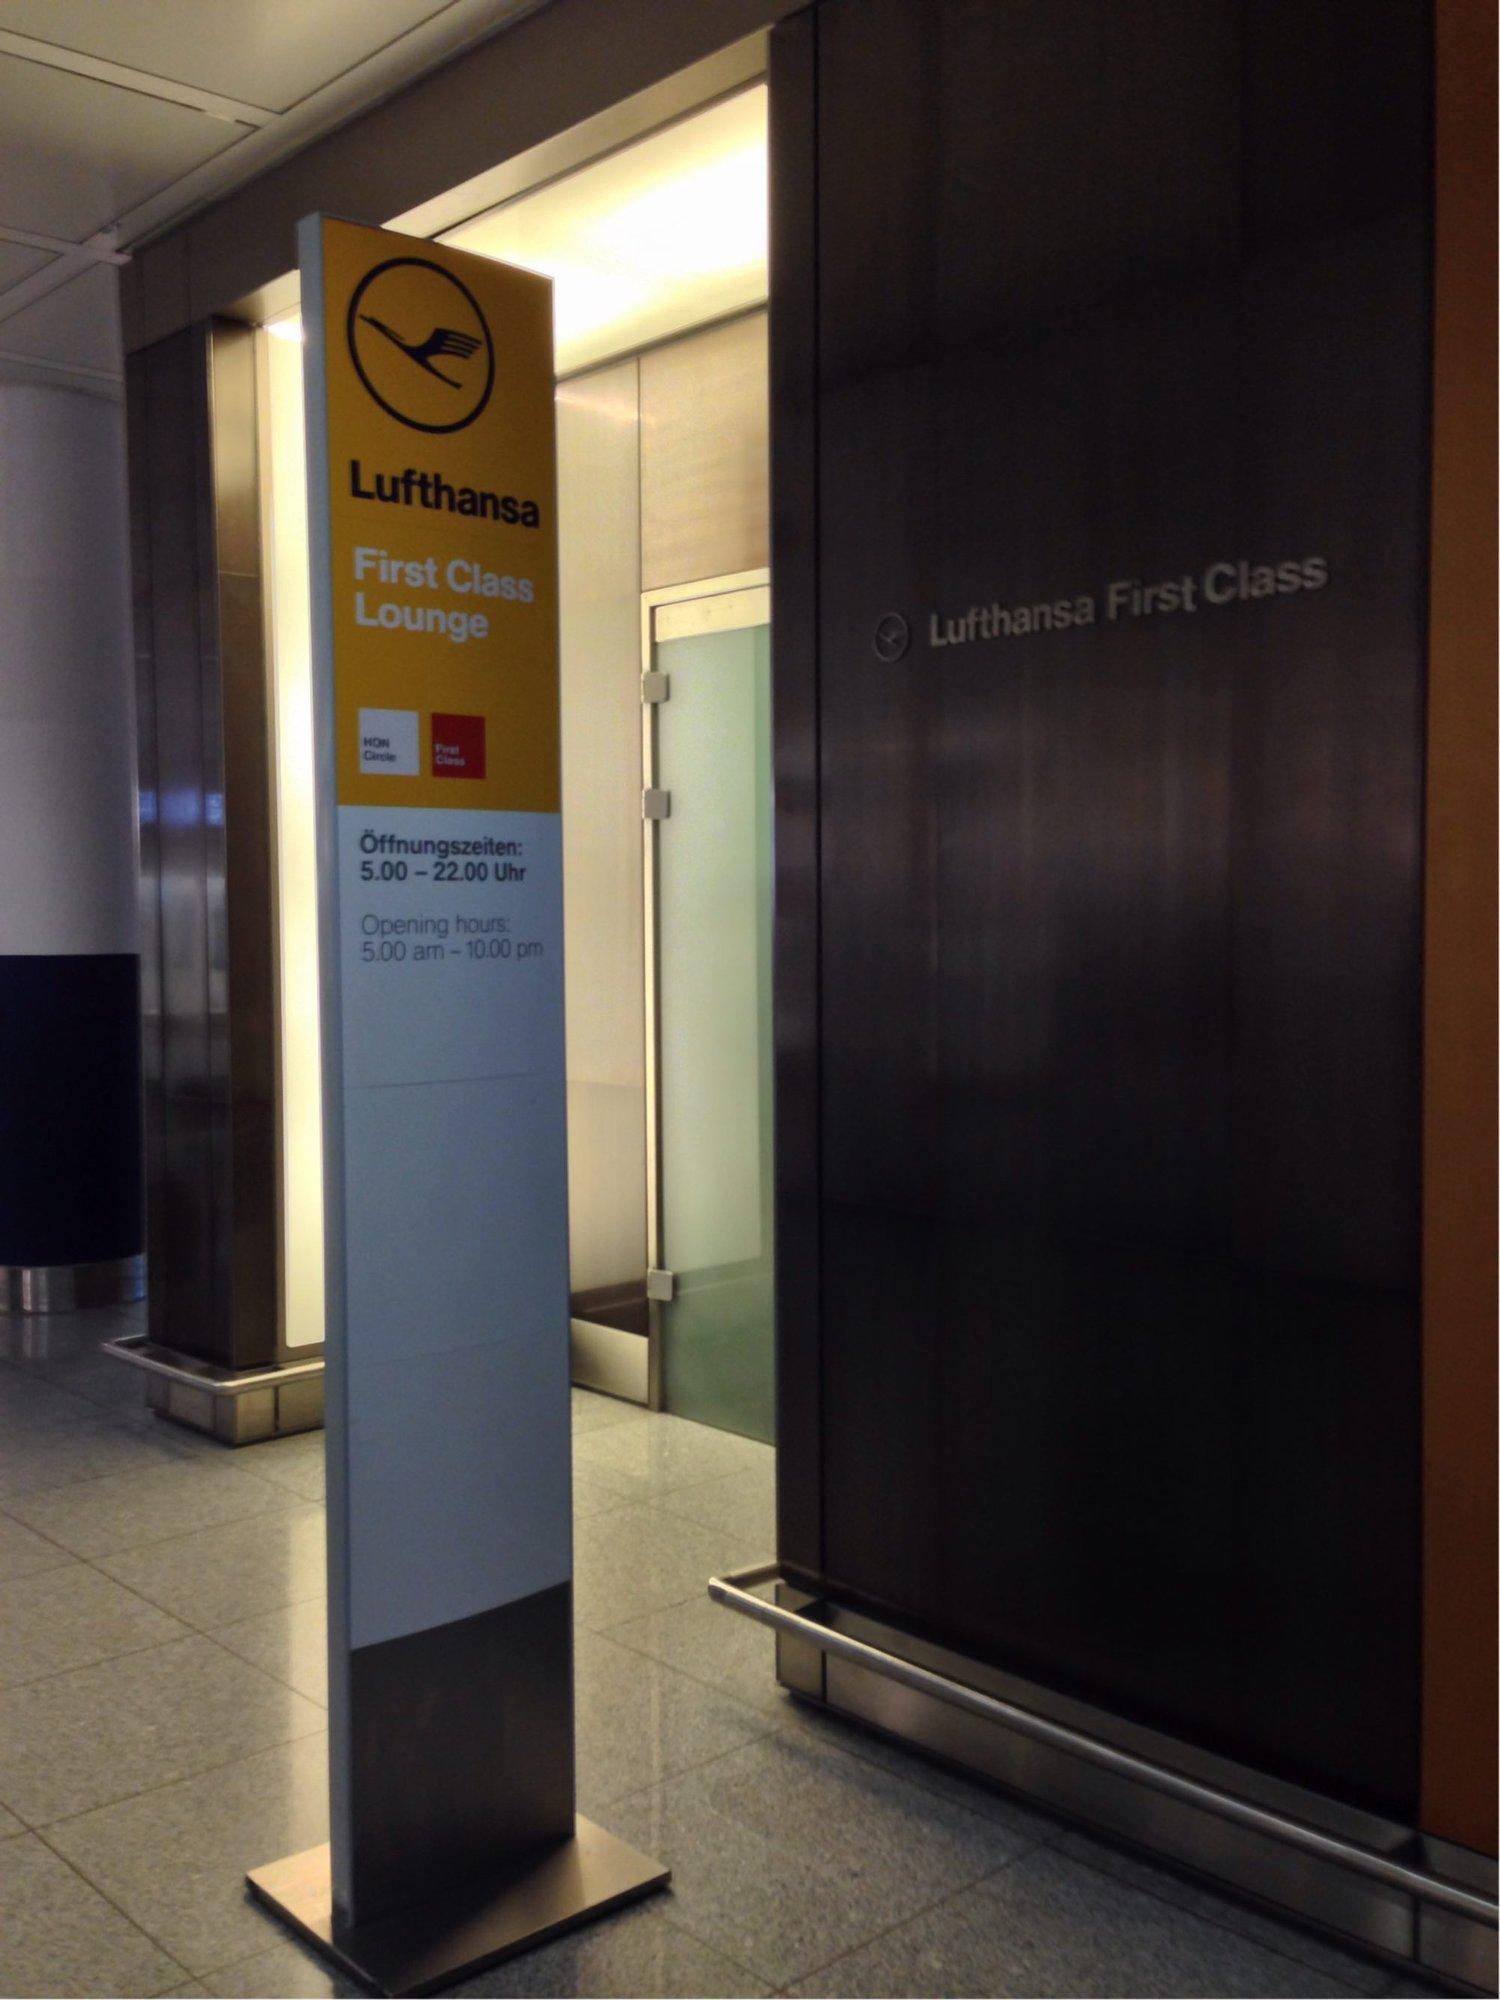 Lufthansa First Class Lounge image 37 of 42